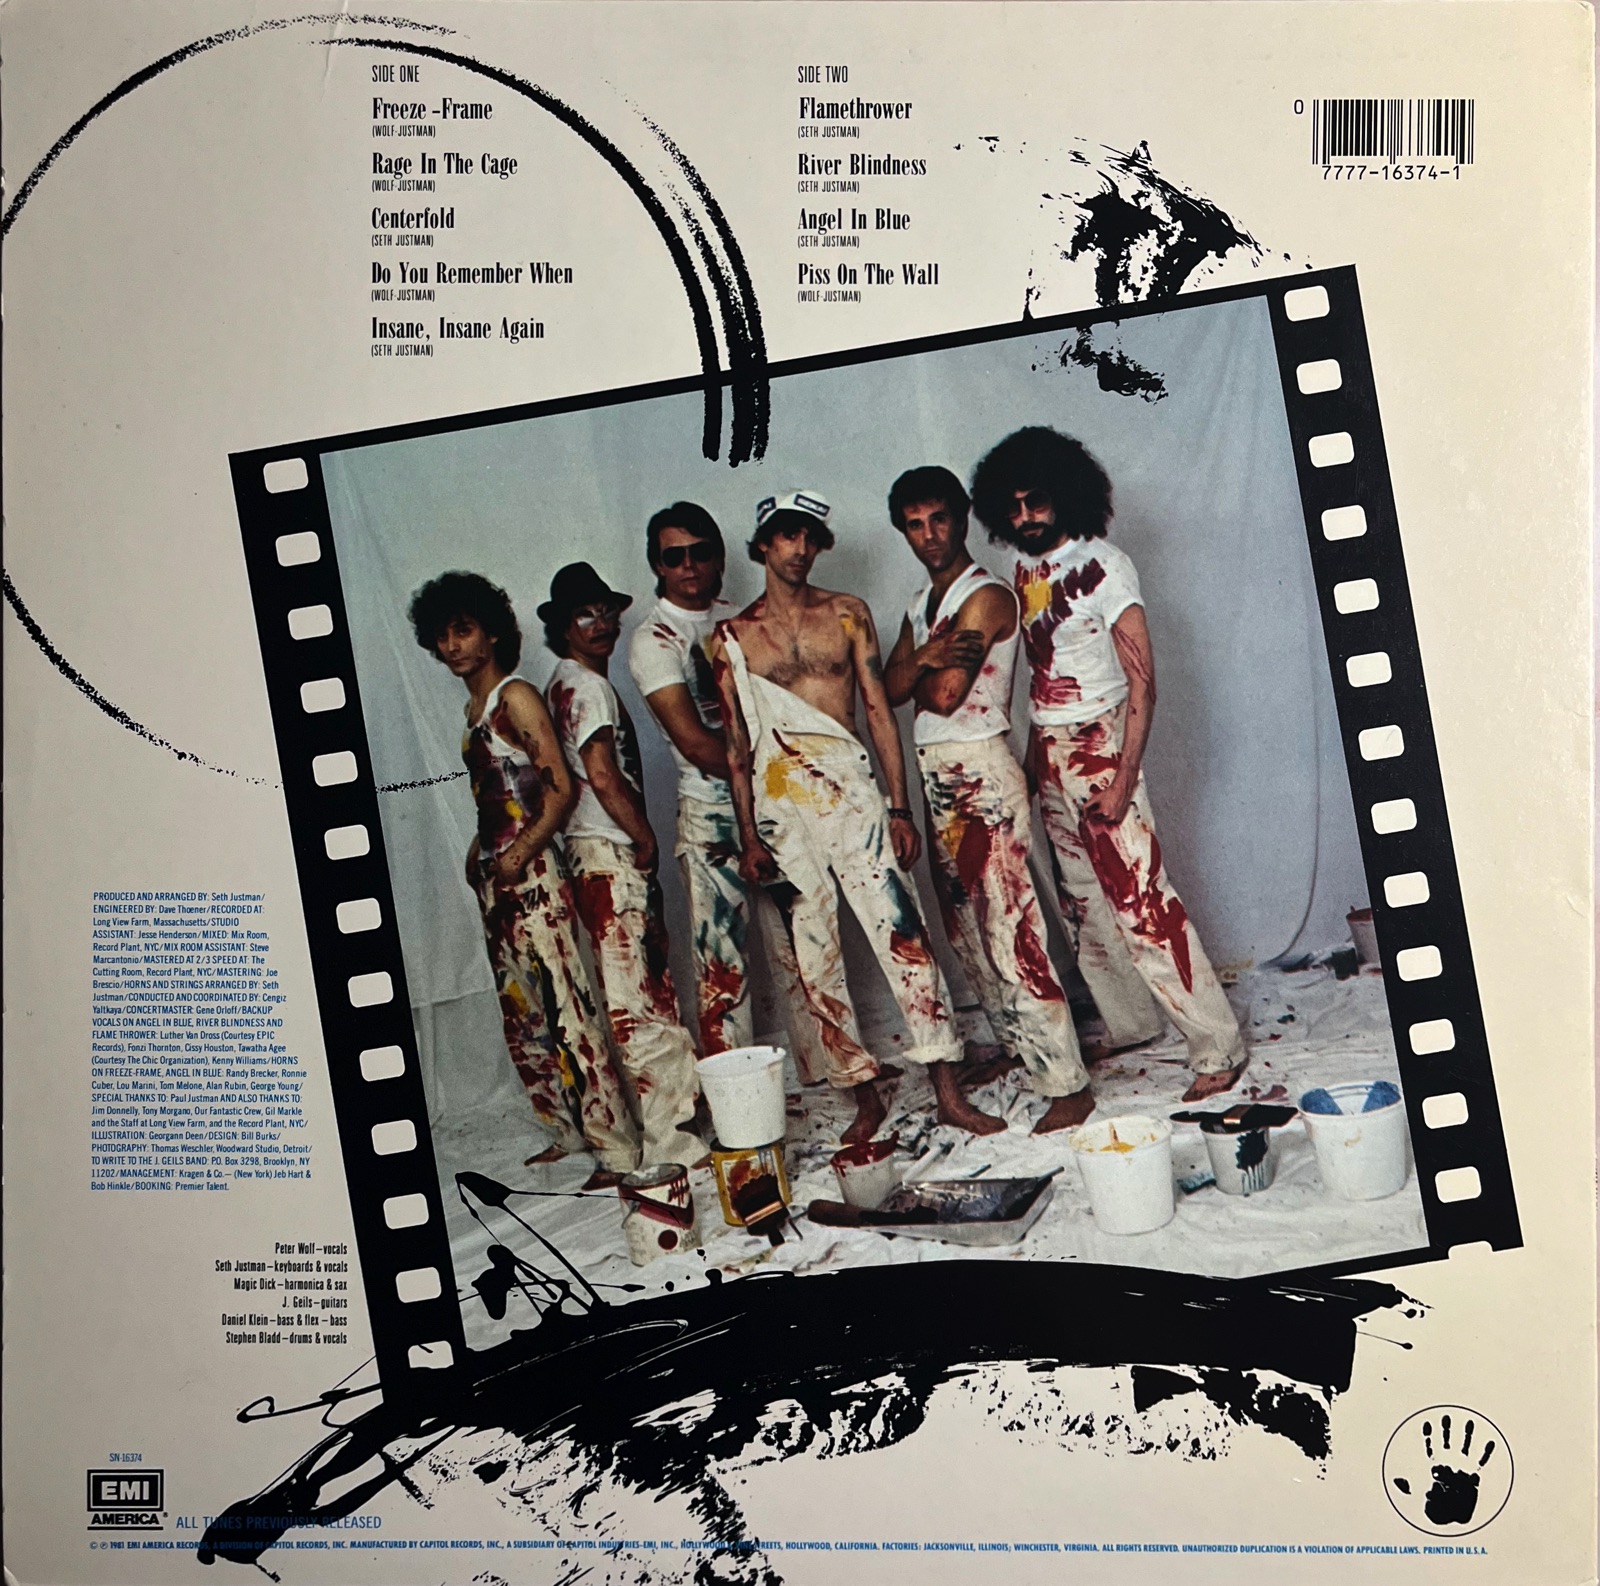 1987-Freeze-Frame Re-Release, EMI-Manhattan